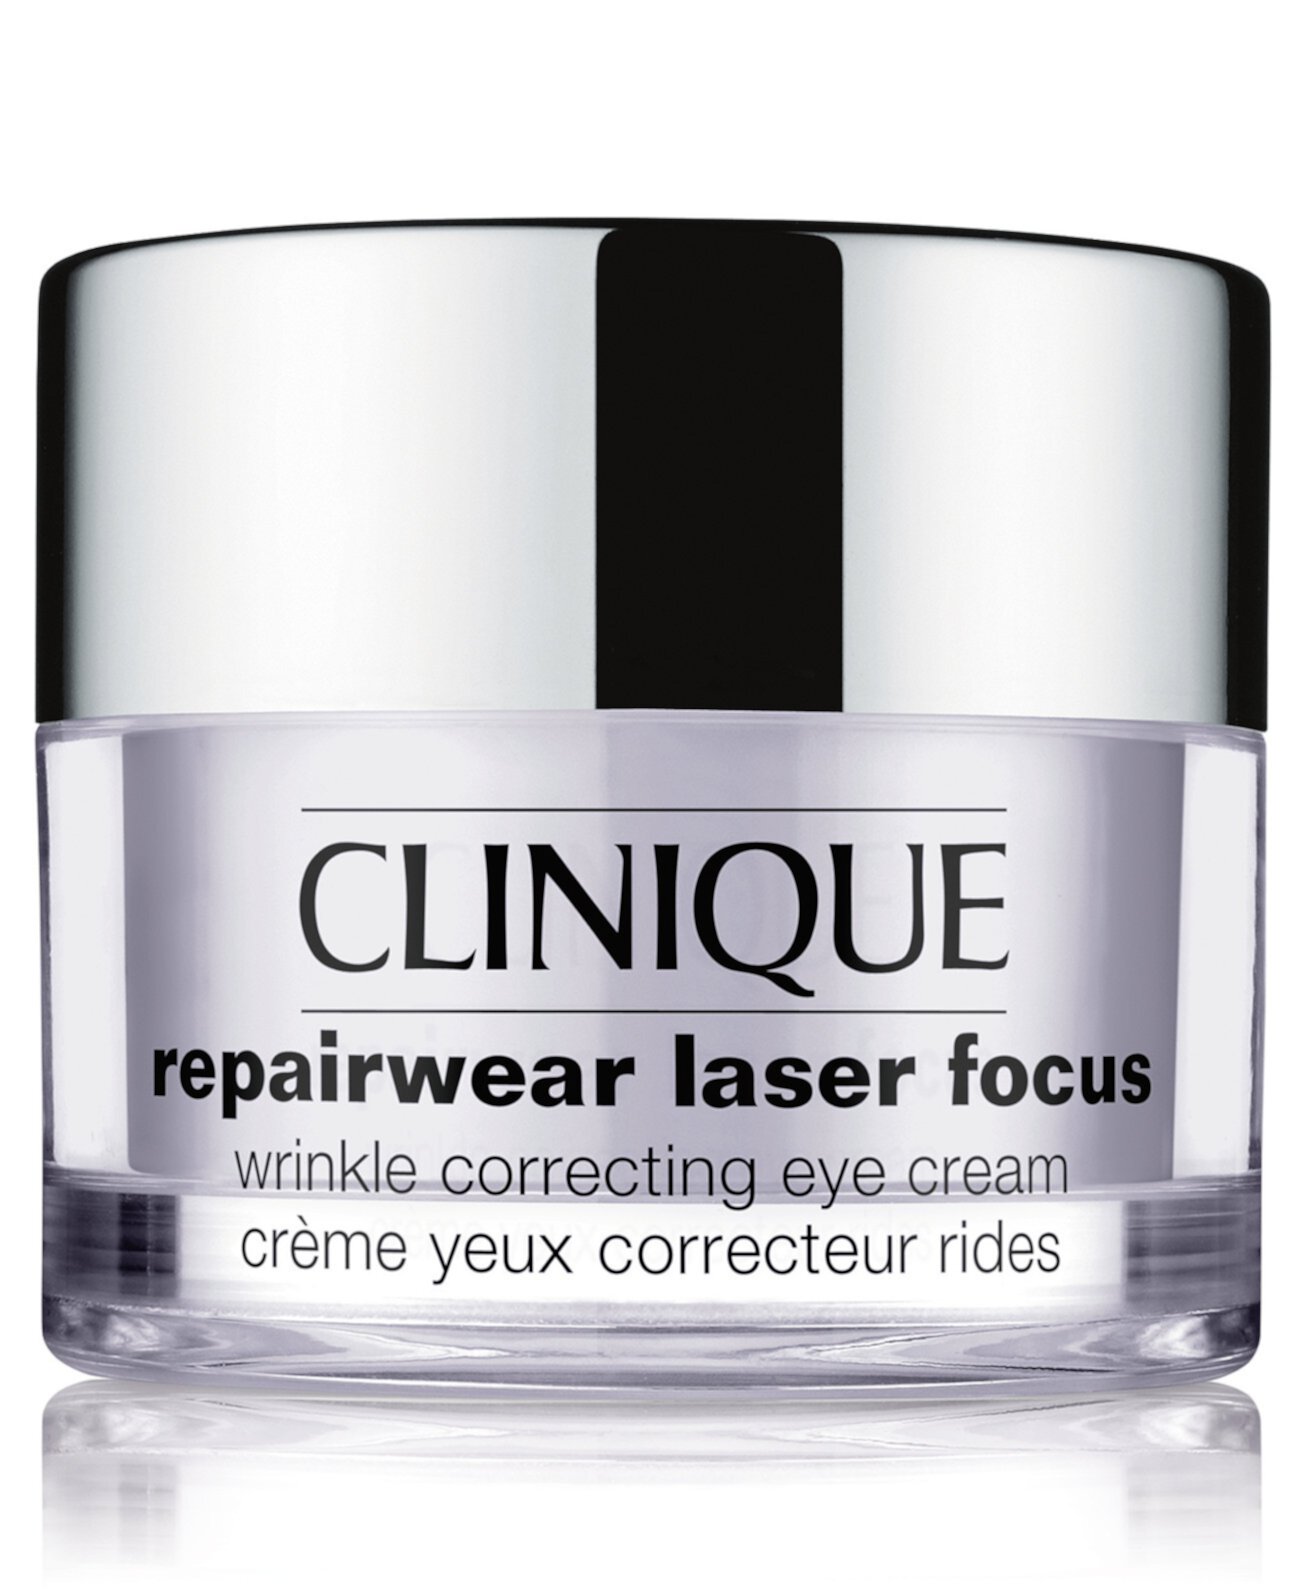 Repairwear Laser Focus Крем для коррекции морщин вокруг глаз, 1 унция. Clinique